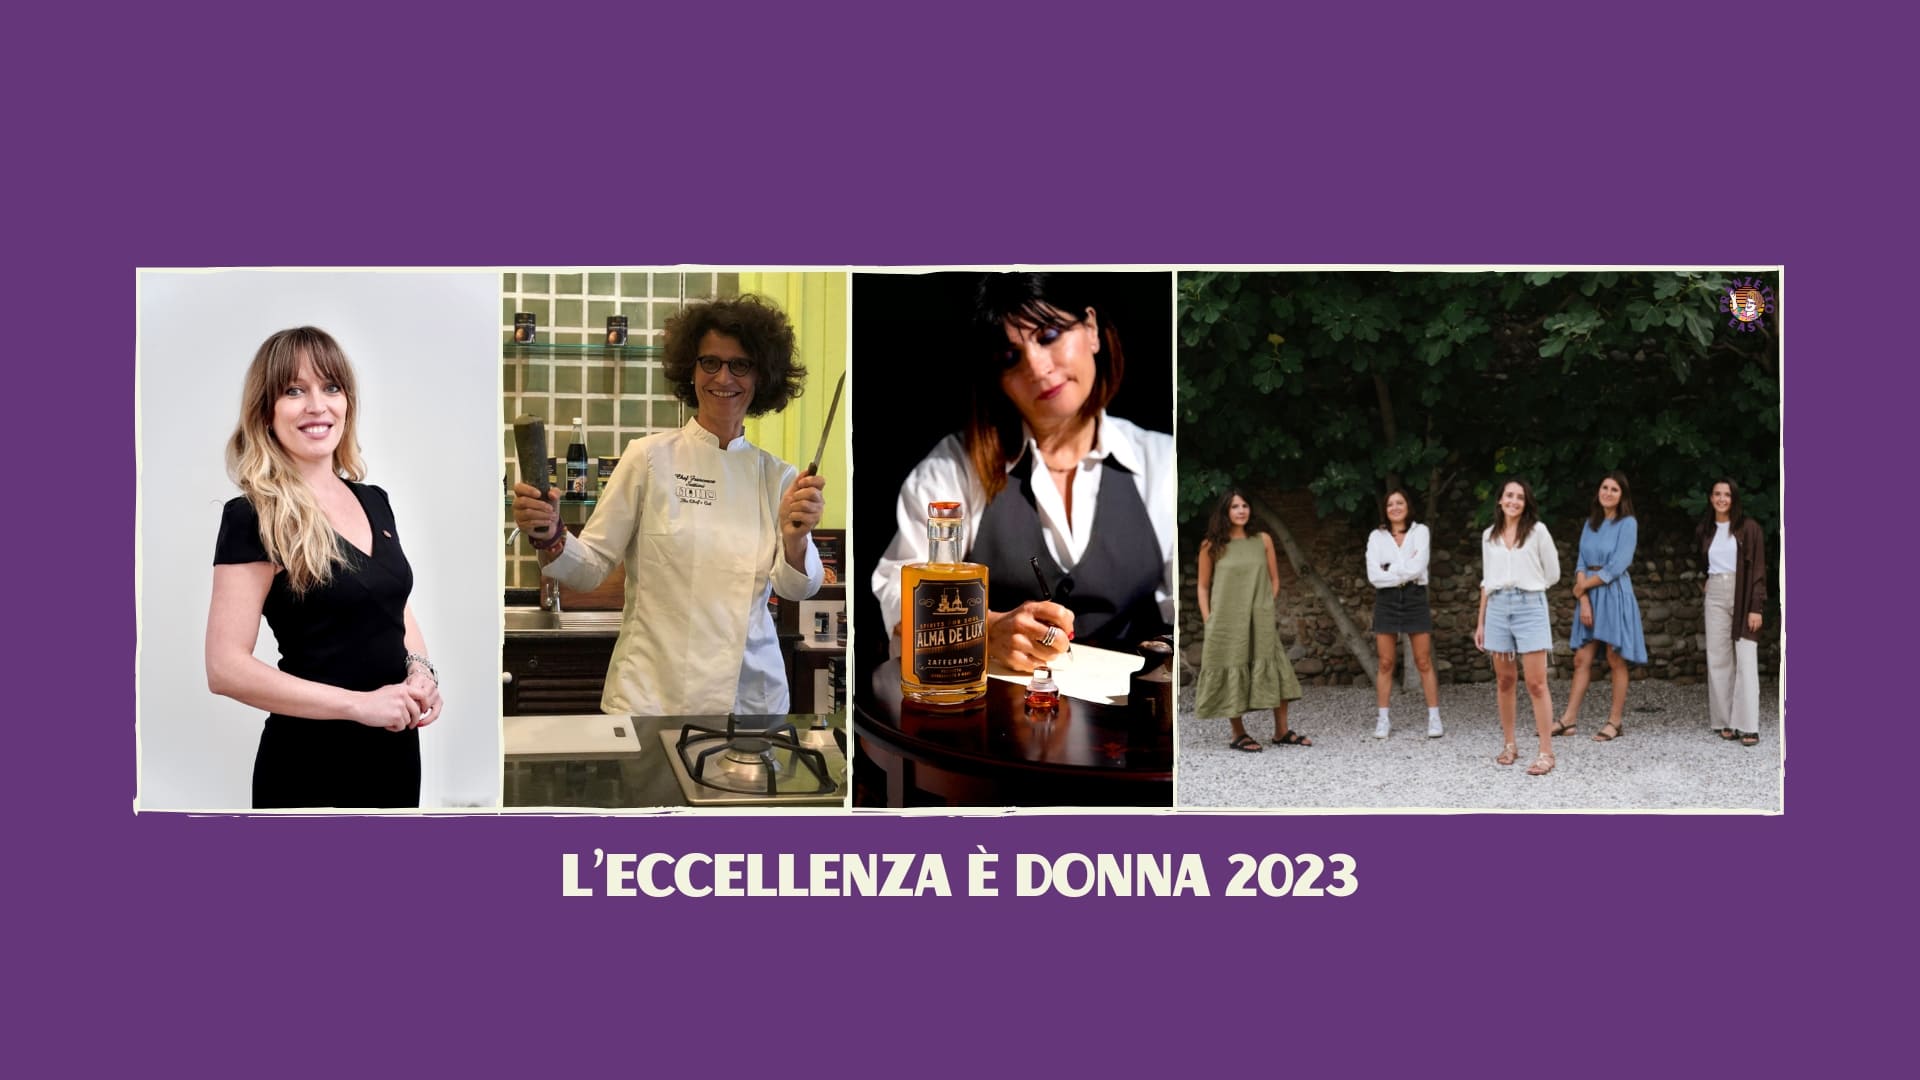 L'ECCELLENZA È DONNA 2023 - Cristina Mercuri, Alma De Lux, Francesca Settimi, Meracinque